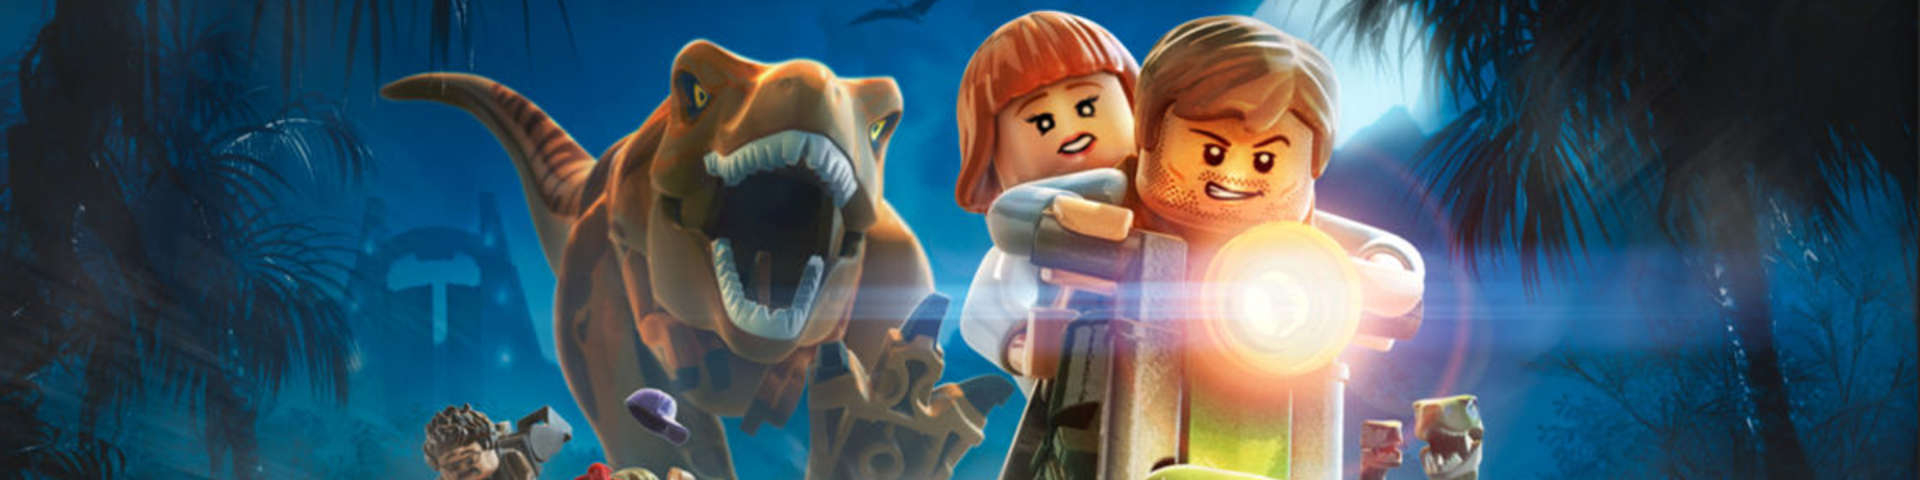 Games Video World | WarnerBros.com LEGO Jurassic |